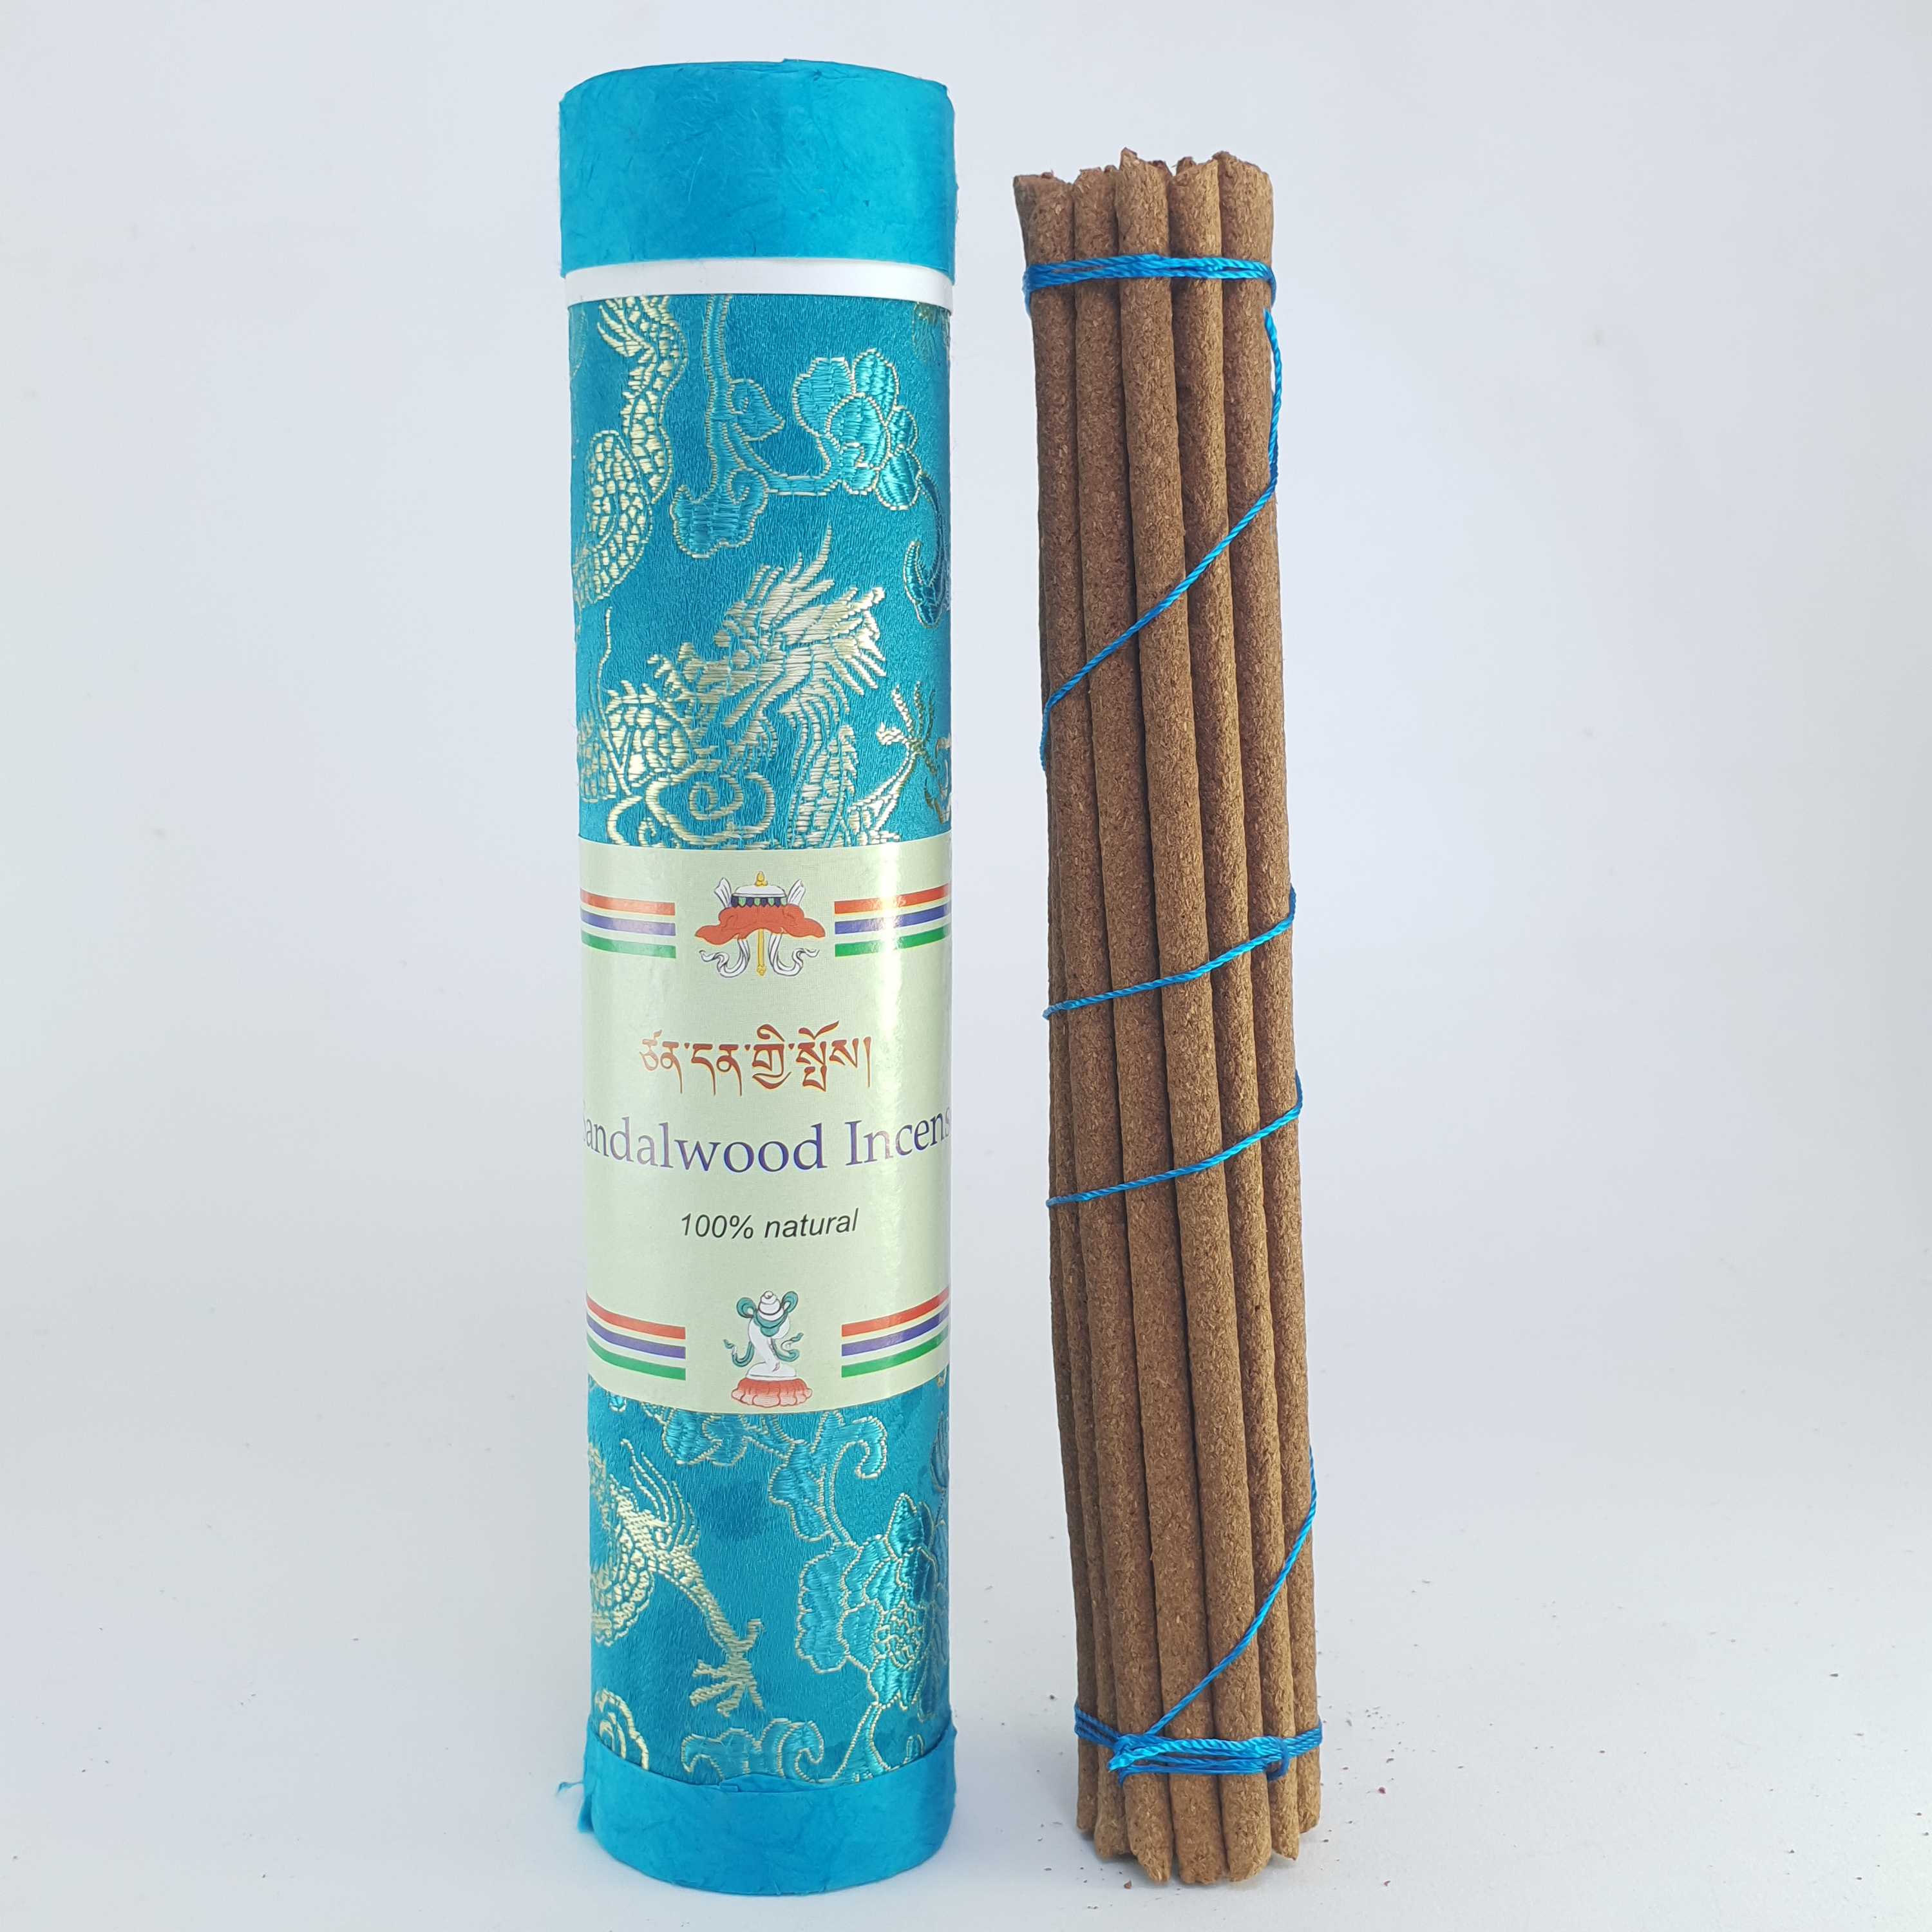 Sandal Wood Buddhist Herbal Incense tube